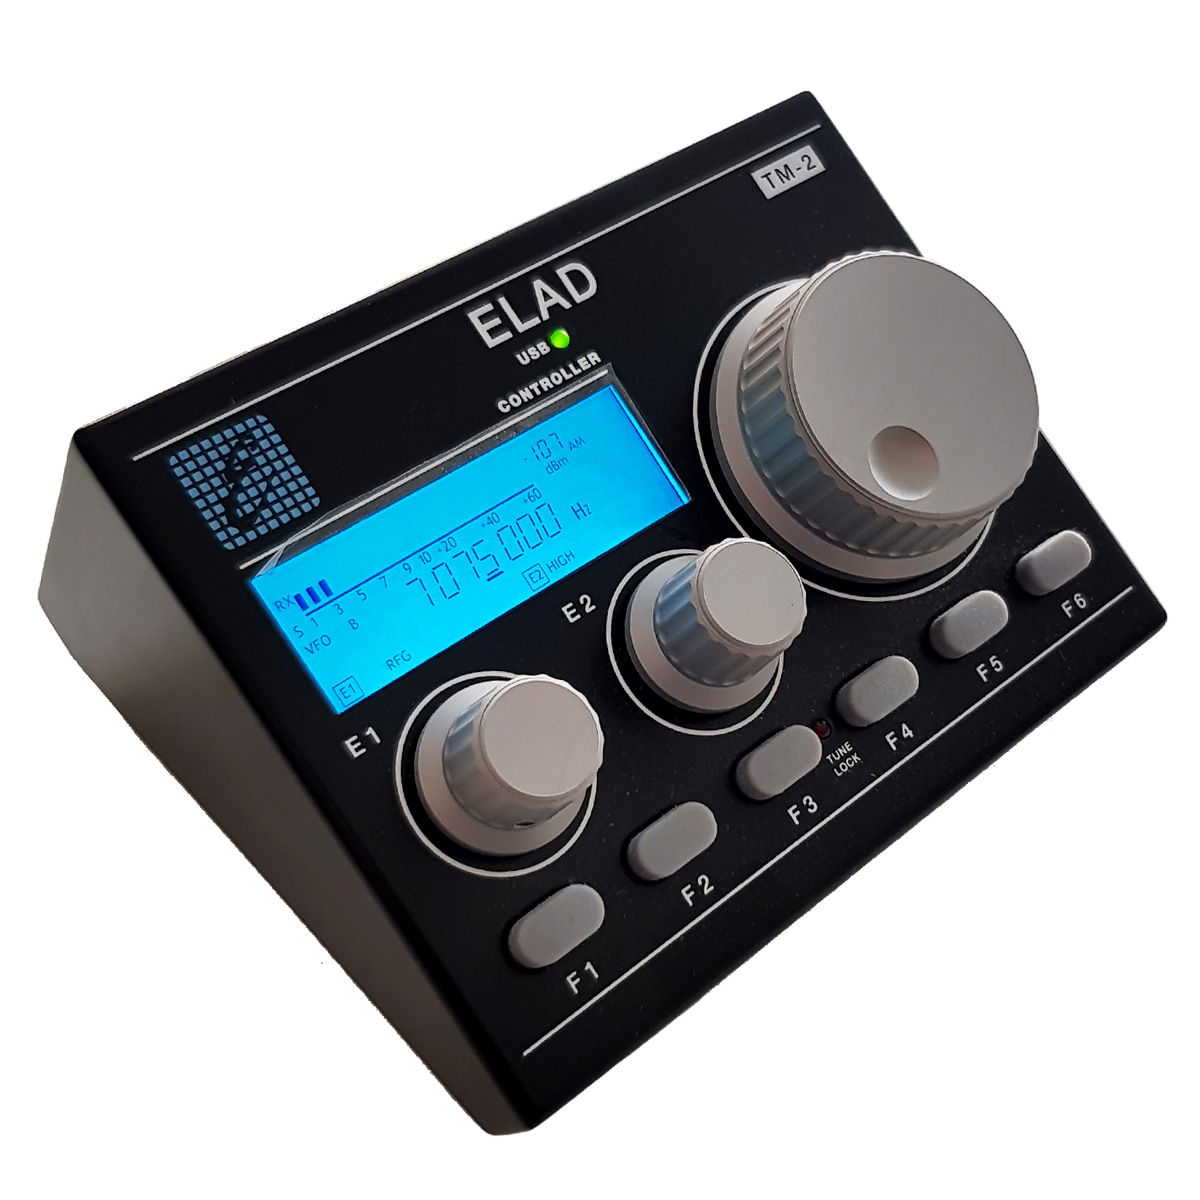 ELAD TMATE TM-2 USB-VFO-Knopf für SDR